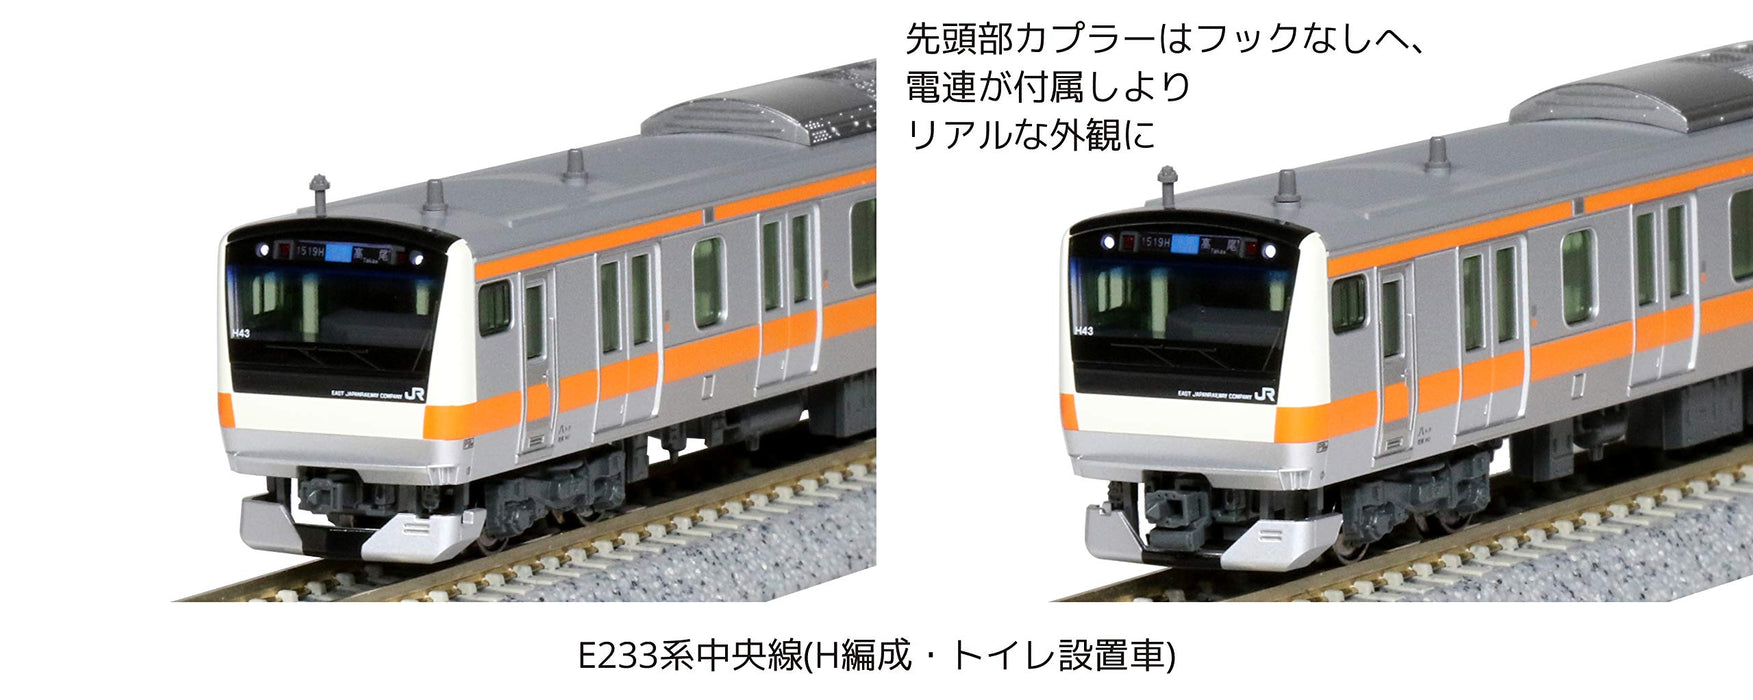 Kato N Gauge 4-Car Addition Set 10-1622 E233 Series Chuo Line Railway Model Train